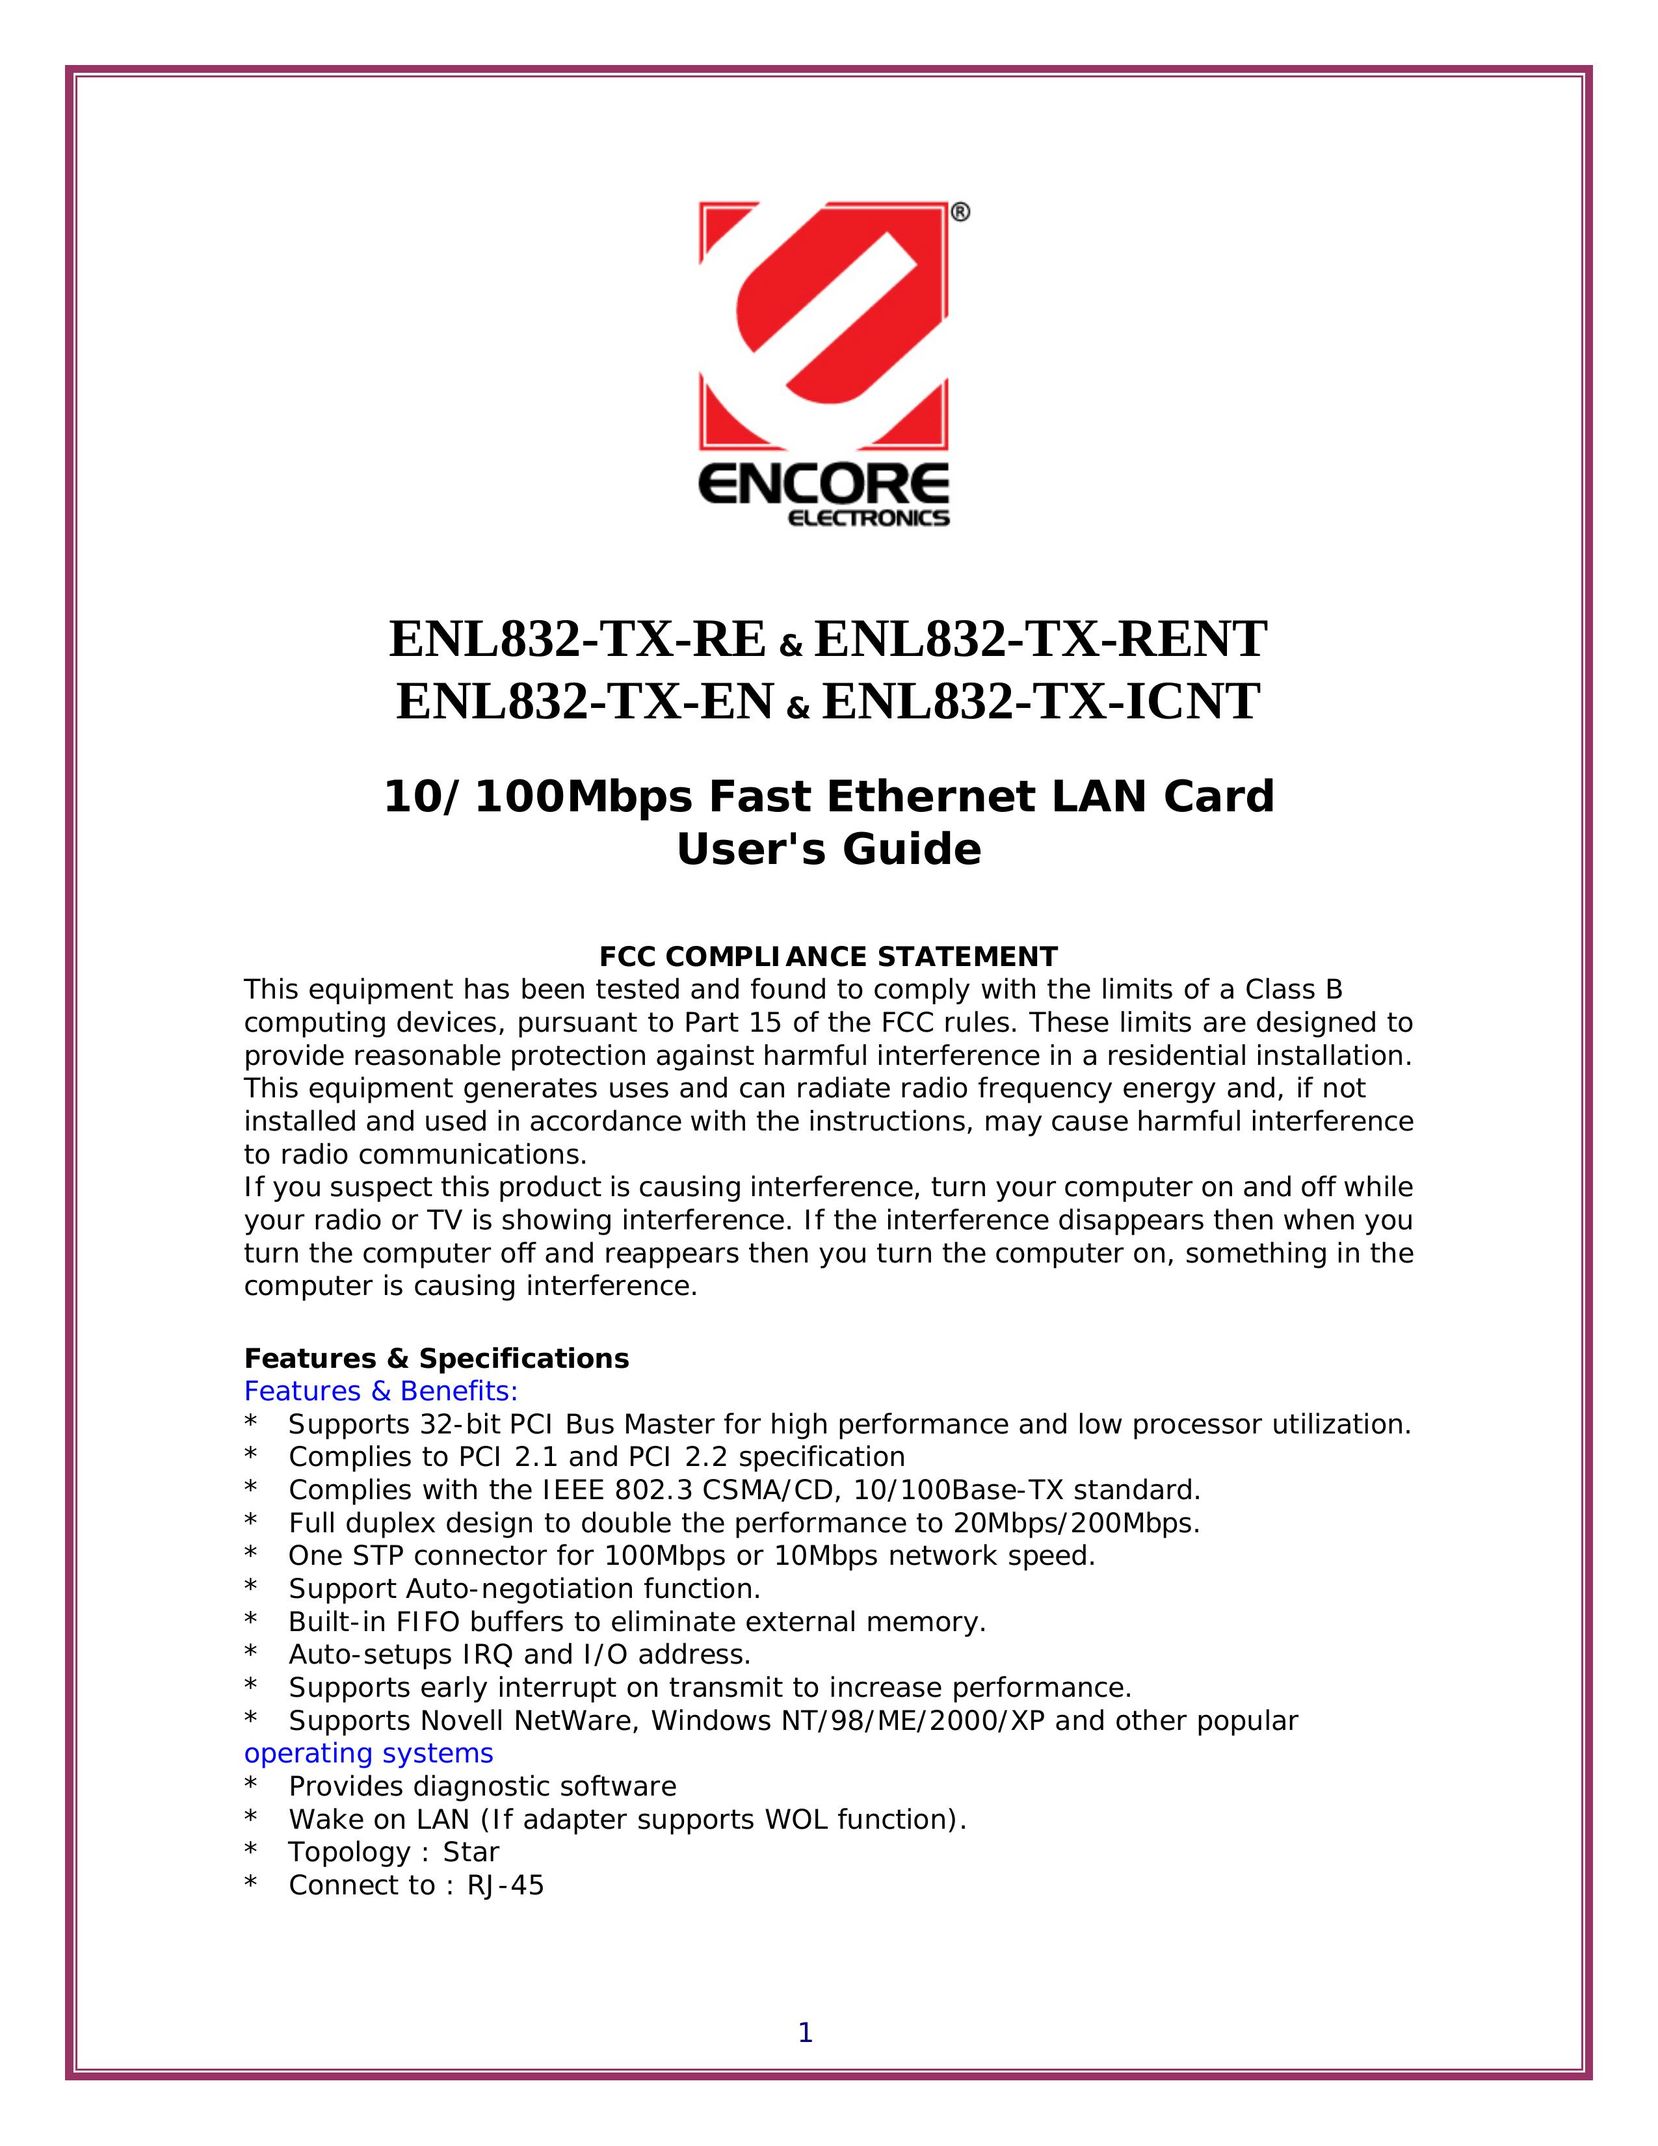 Encore electronic ENL832-TX-ICNT Network Card User Manual